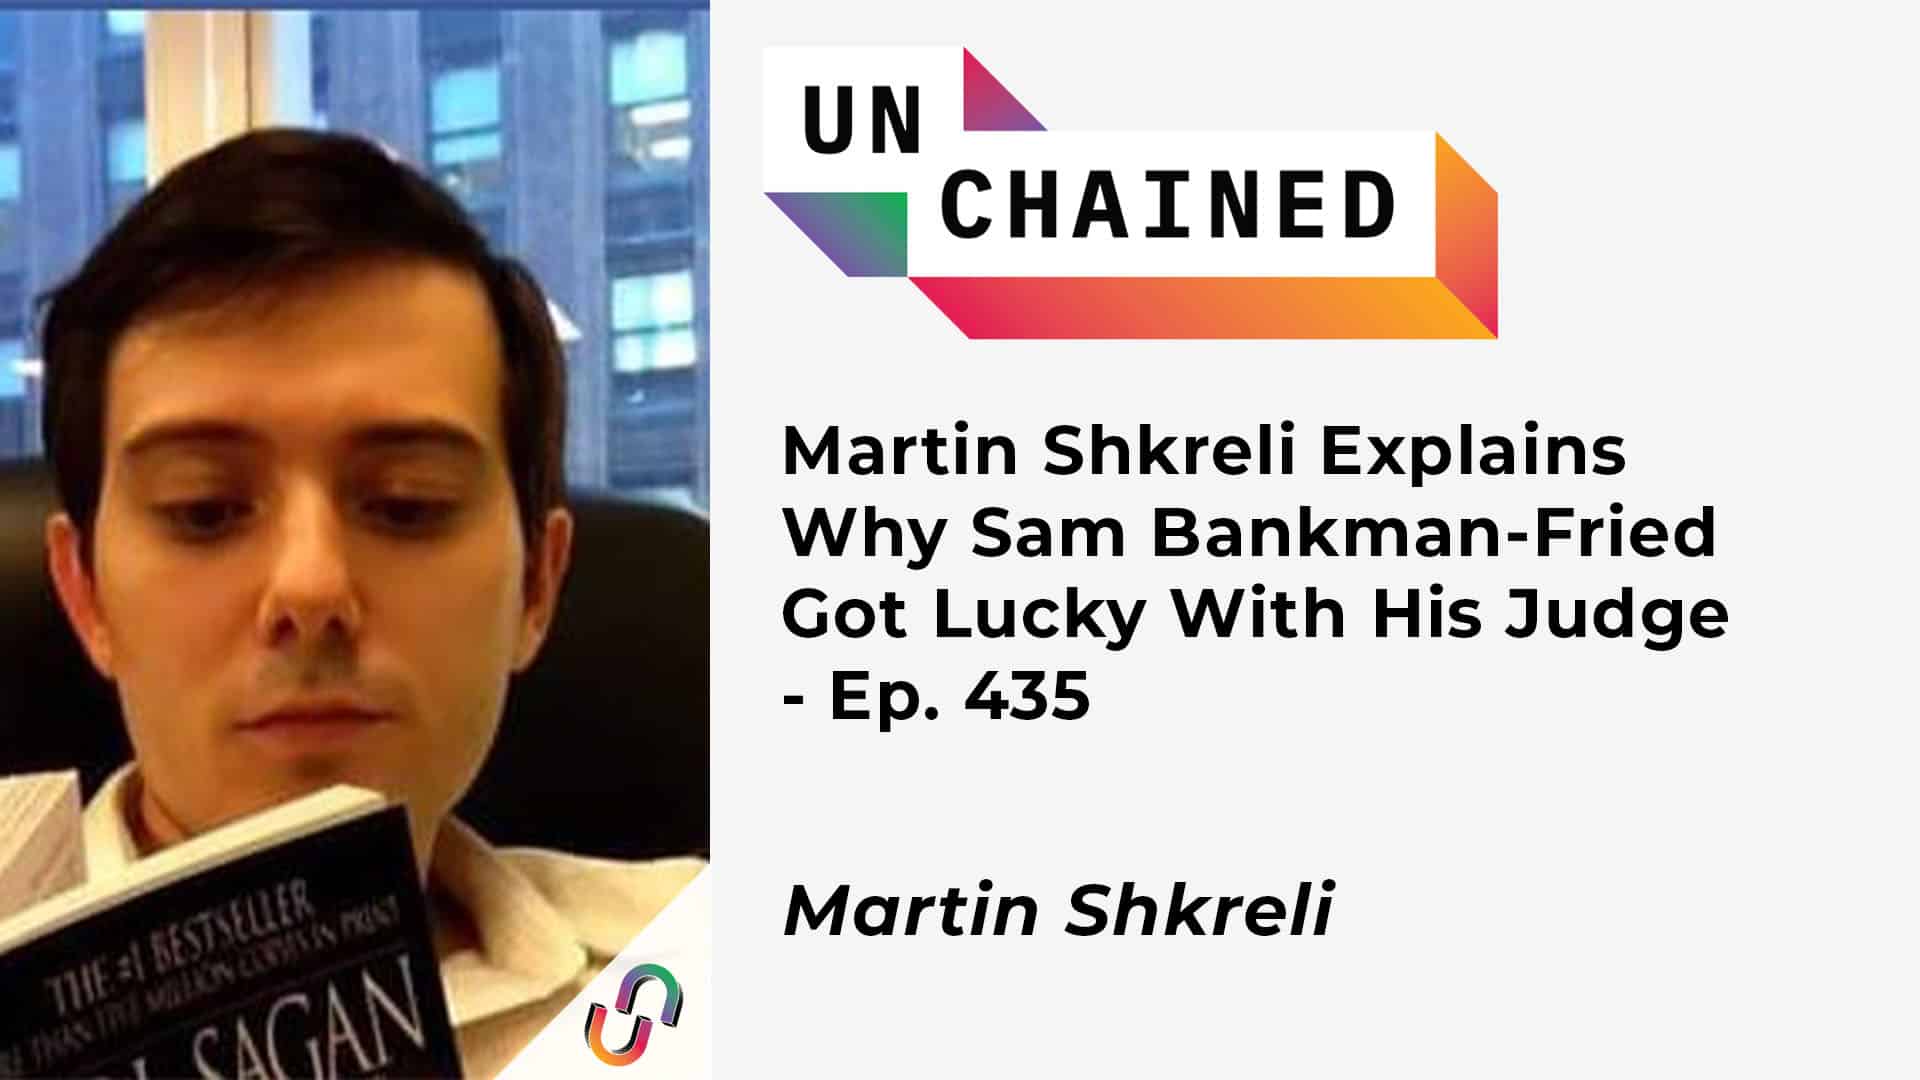 Martin Shkreli Explains Why Sam Bankman-Fried Got Lucky With His Judge - Ep. 435